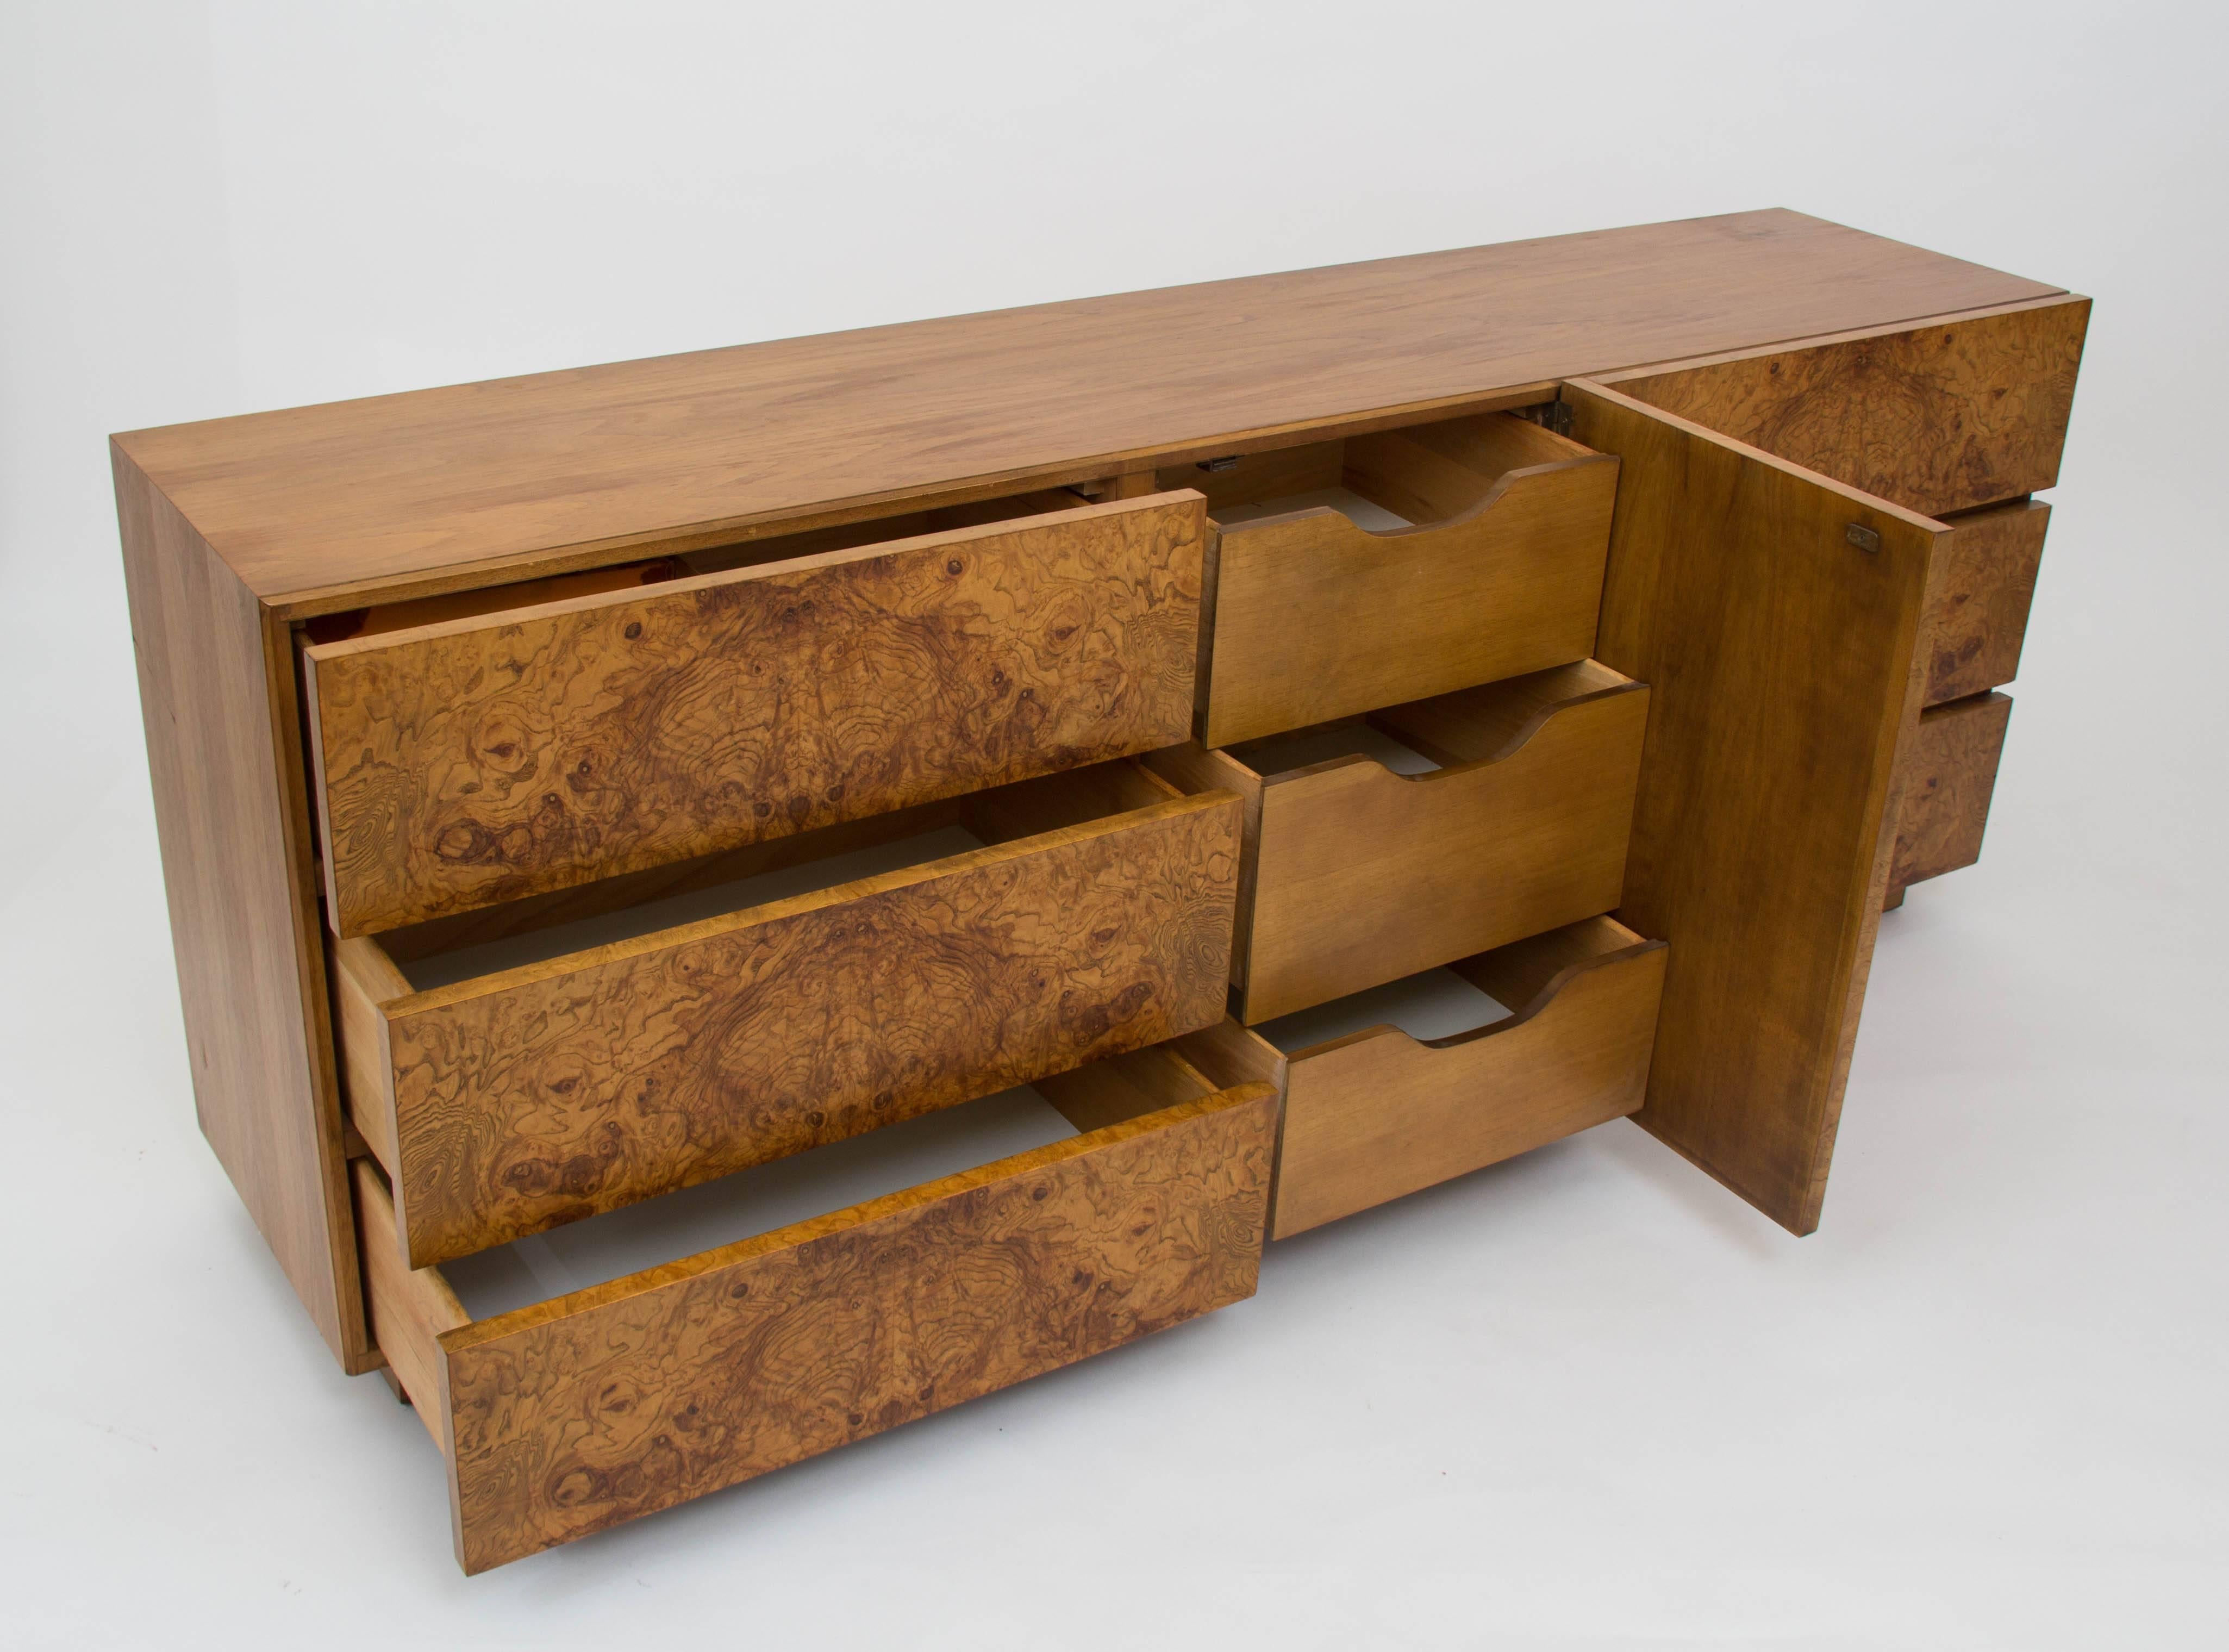 20th Century Olive Burl Wood Credenza or Dresser by Milo Baughman for Lane